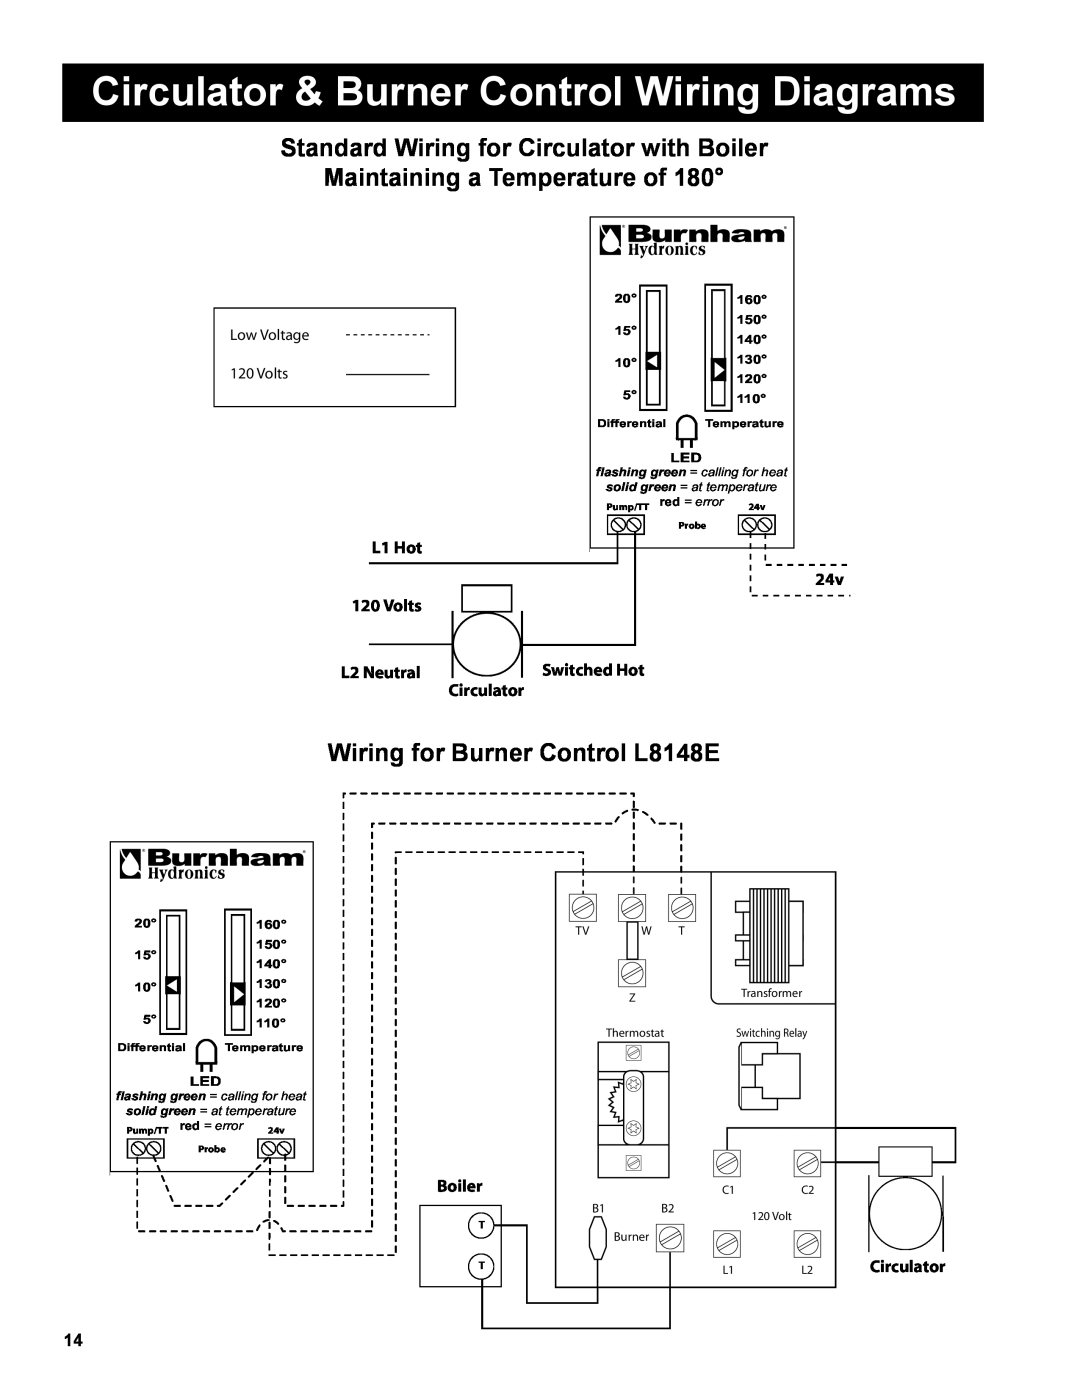 Burnham AL SL Circulator & Burner Control Wiring Diagrams, Standard Wiring for Circulator with Boiler, Switched Hot, Volt 